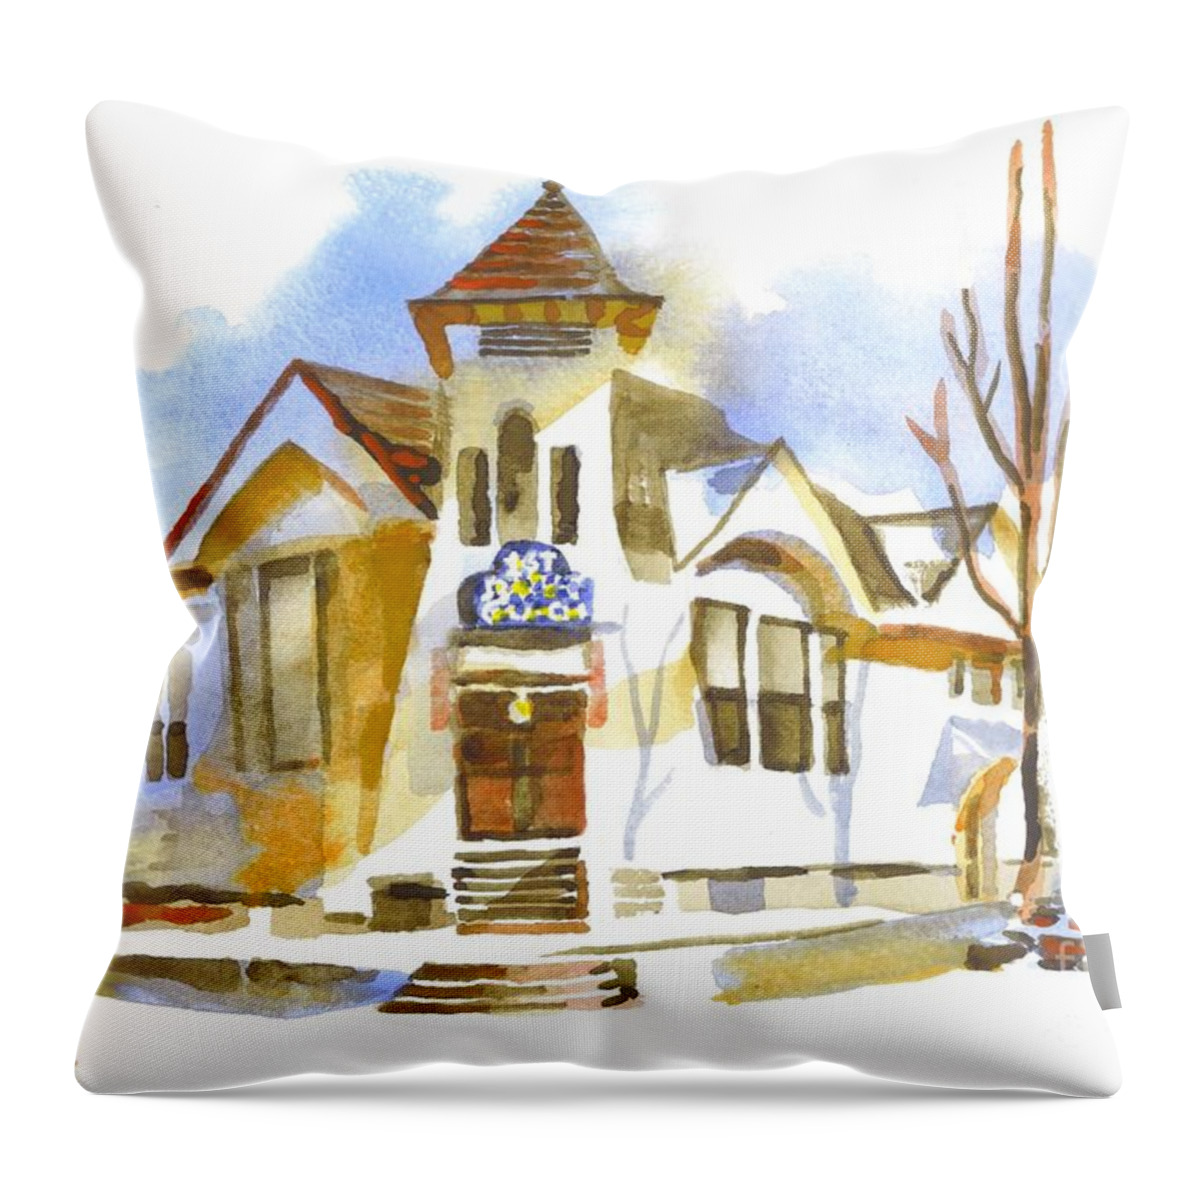 First Baptist Church In Winter Throw Pillow featuring the painting First Baptist Church in Winter by Kip DeVore